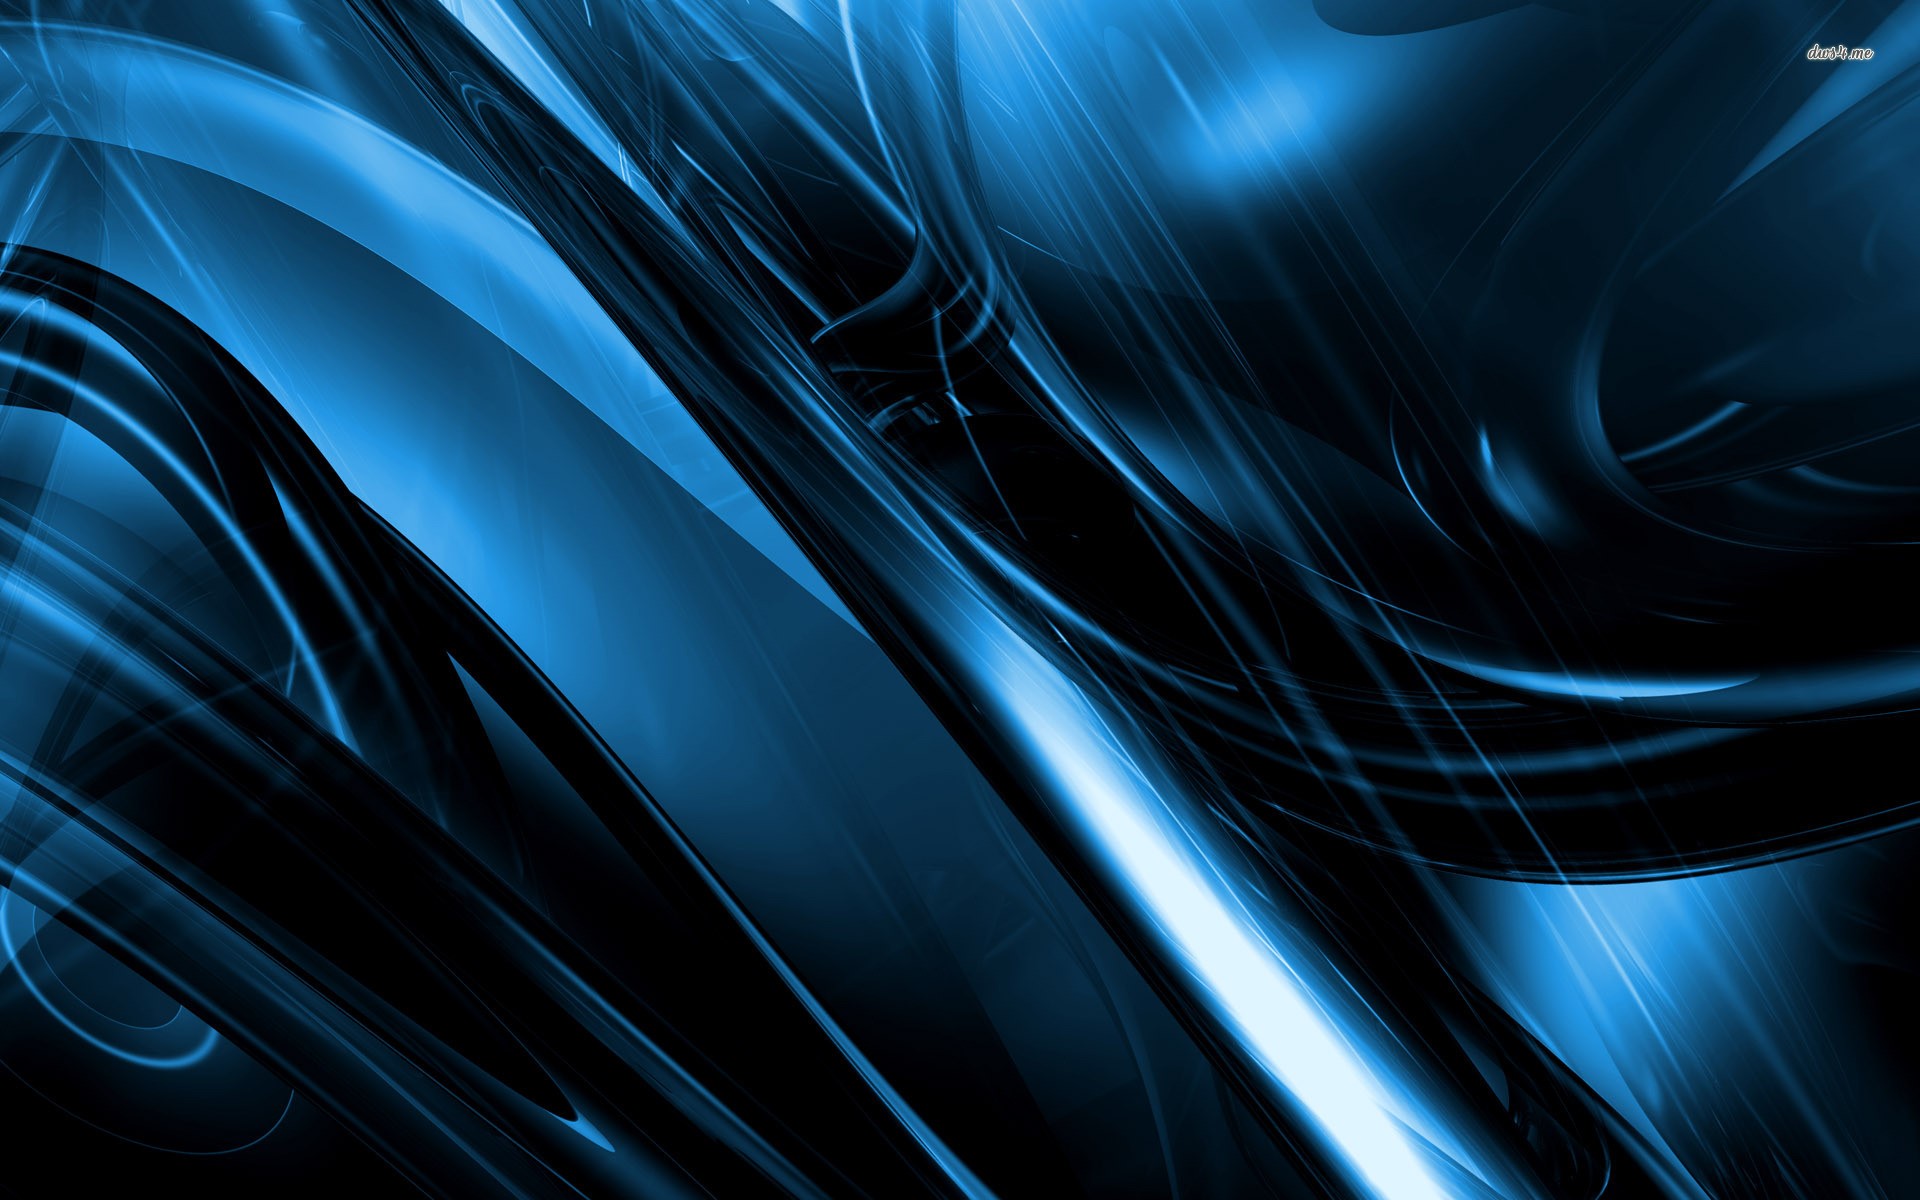 Free Download Blue Metallic Wallpaper Sf Wallpaper 19x10 For Your Desktop Mobile Tablet Explore 25 Metallic Blue Wallpapers Metallic Blue Wallpapers Metallic Blue Wallpaper Blue Metallic Wallpaper